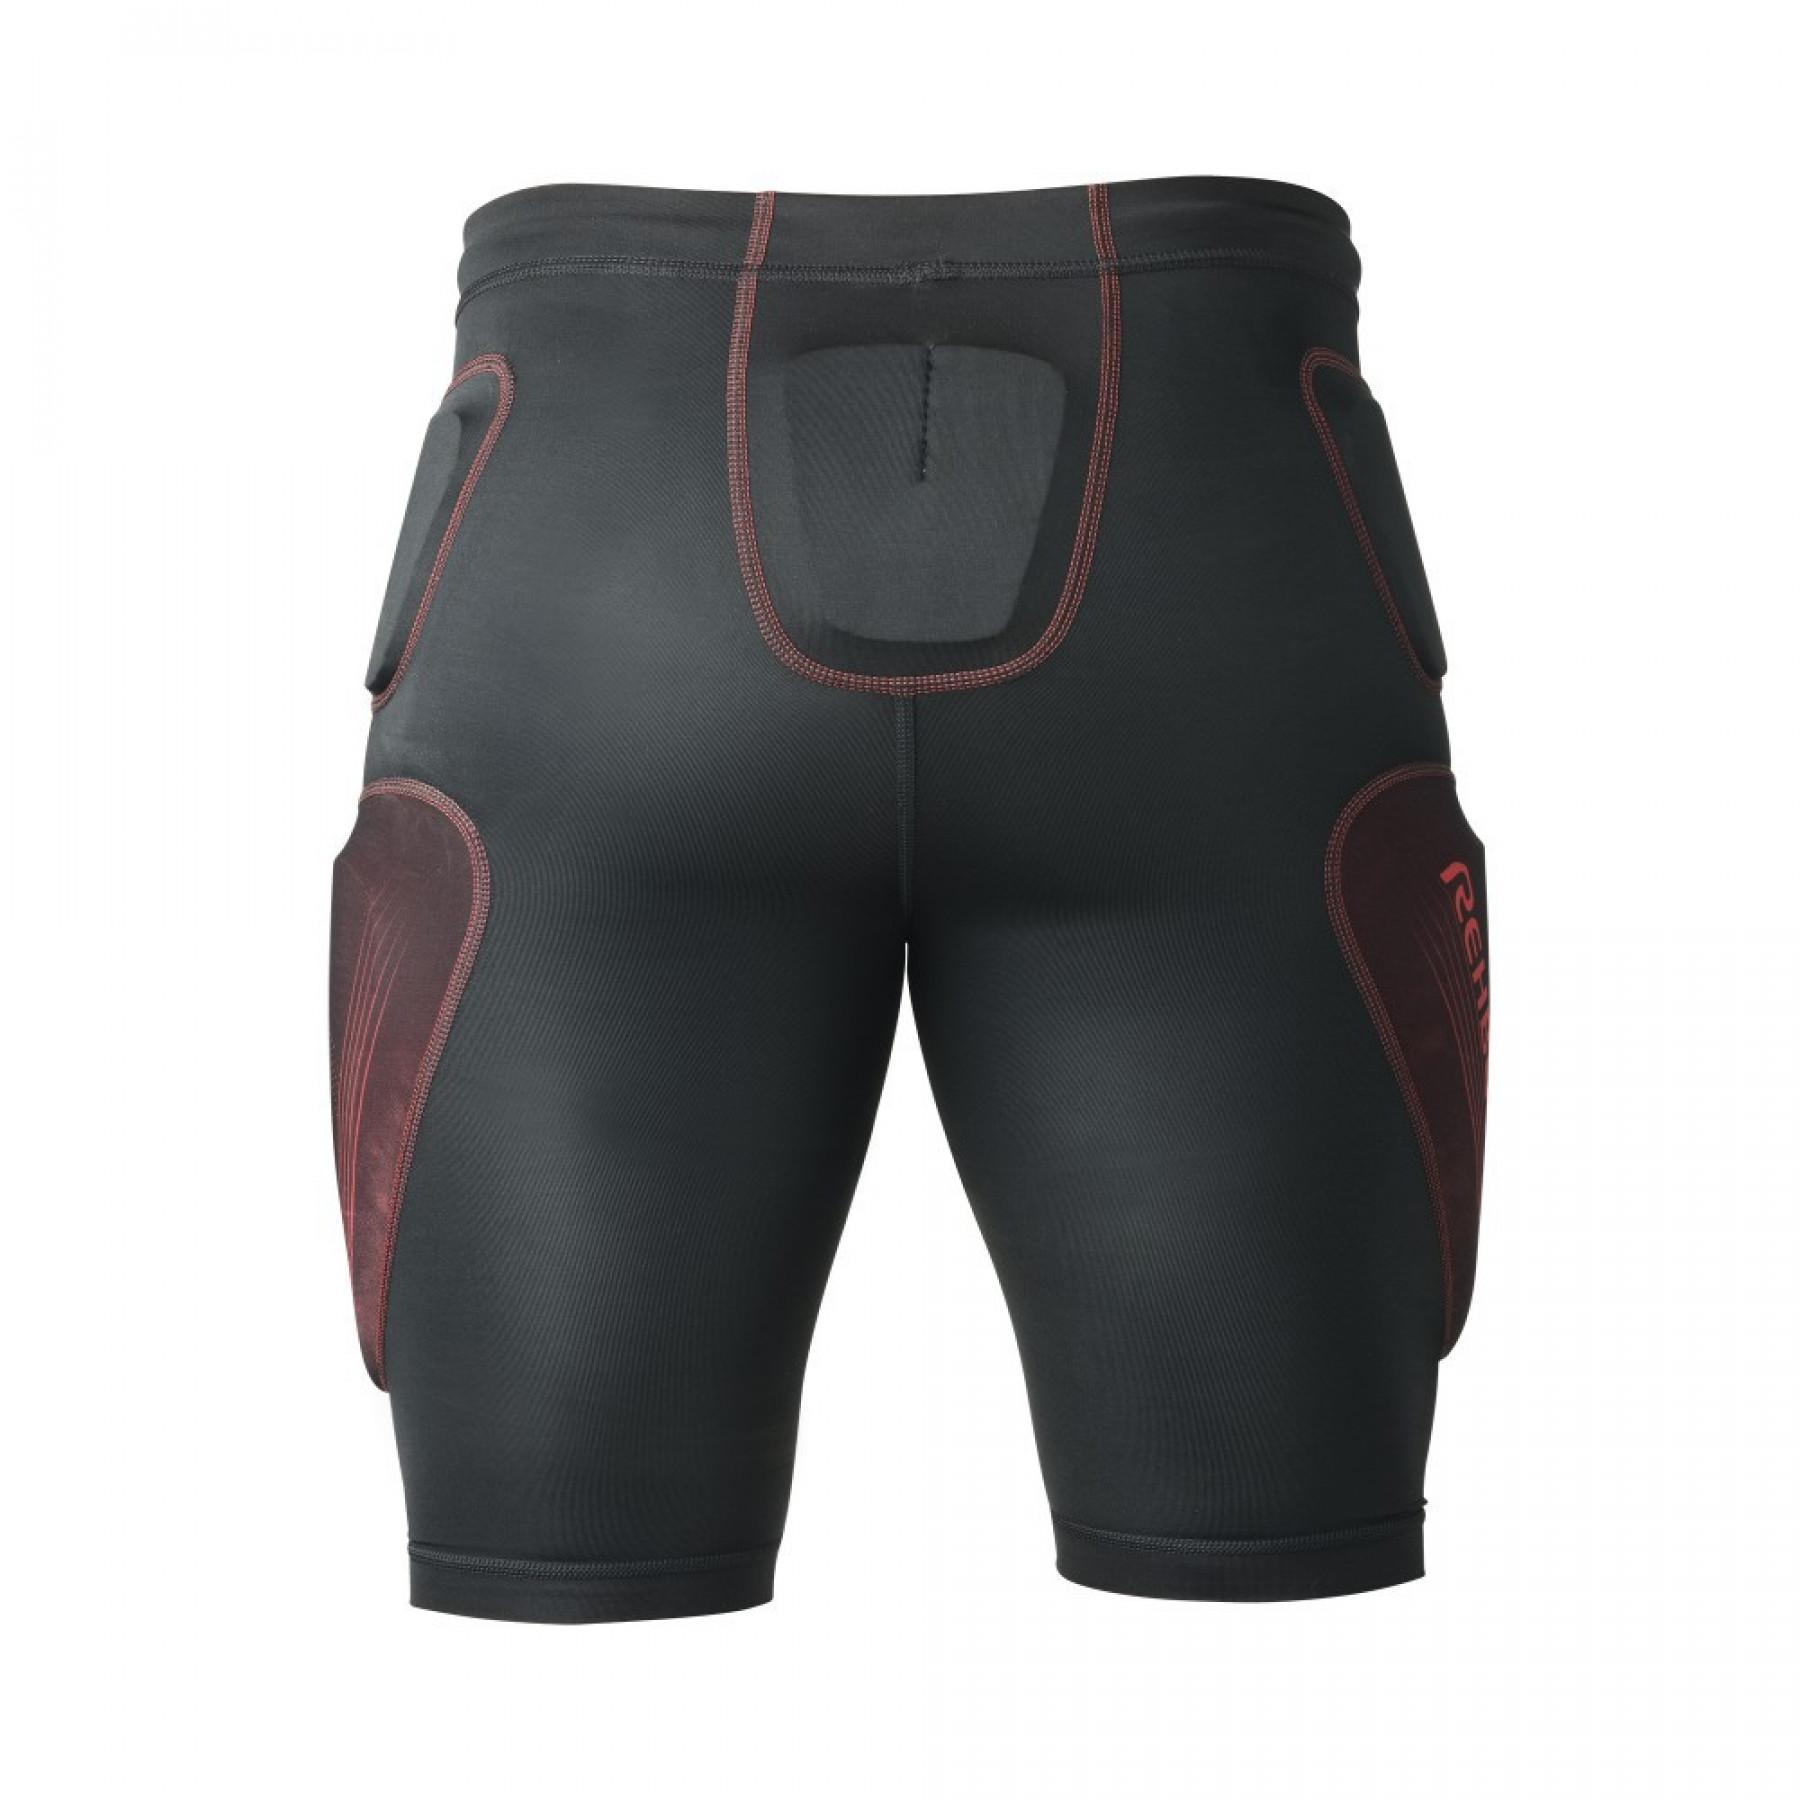 Pantalones cortos de compresión Rehband RX Contact